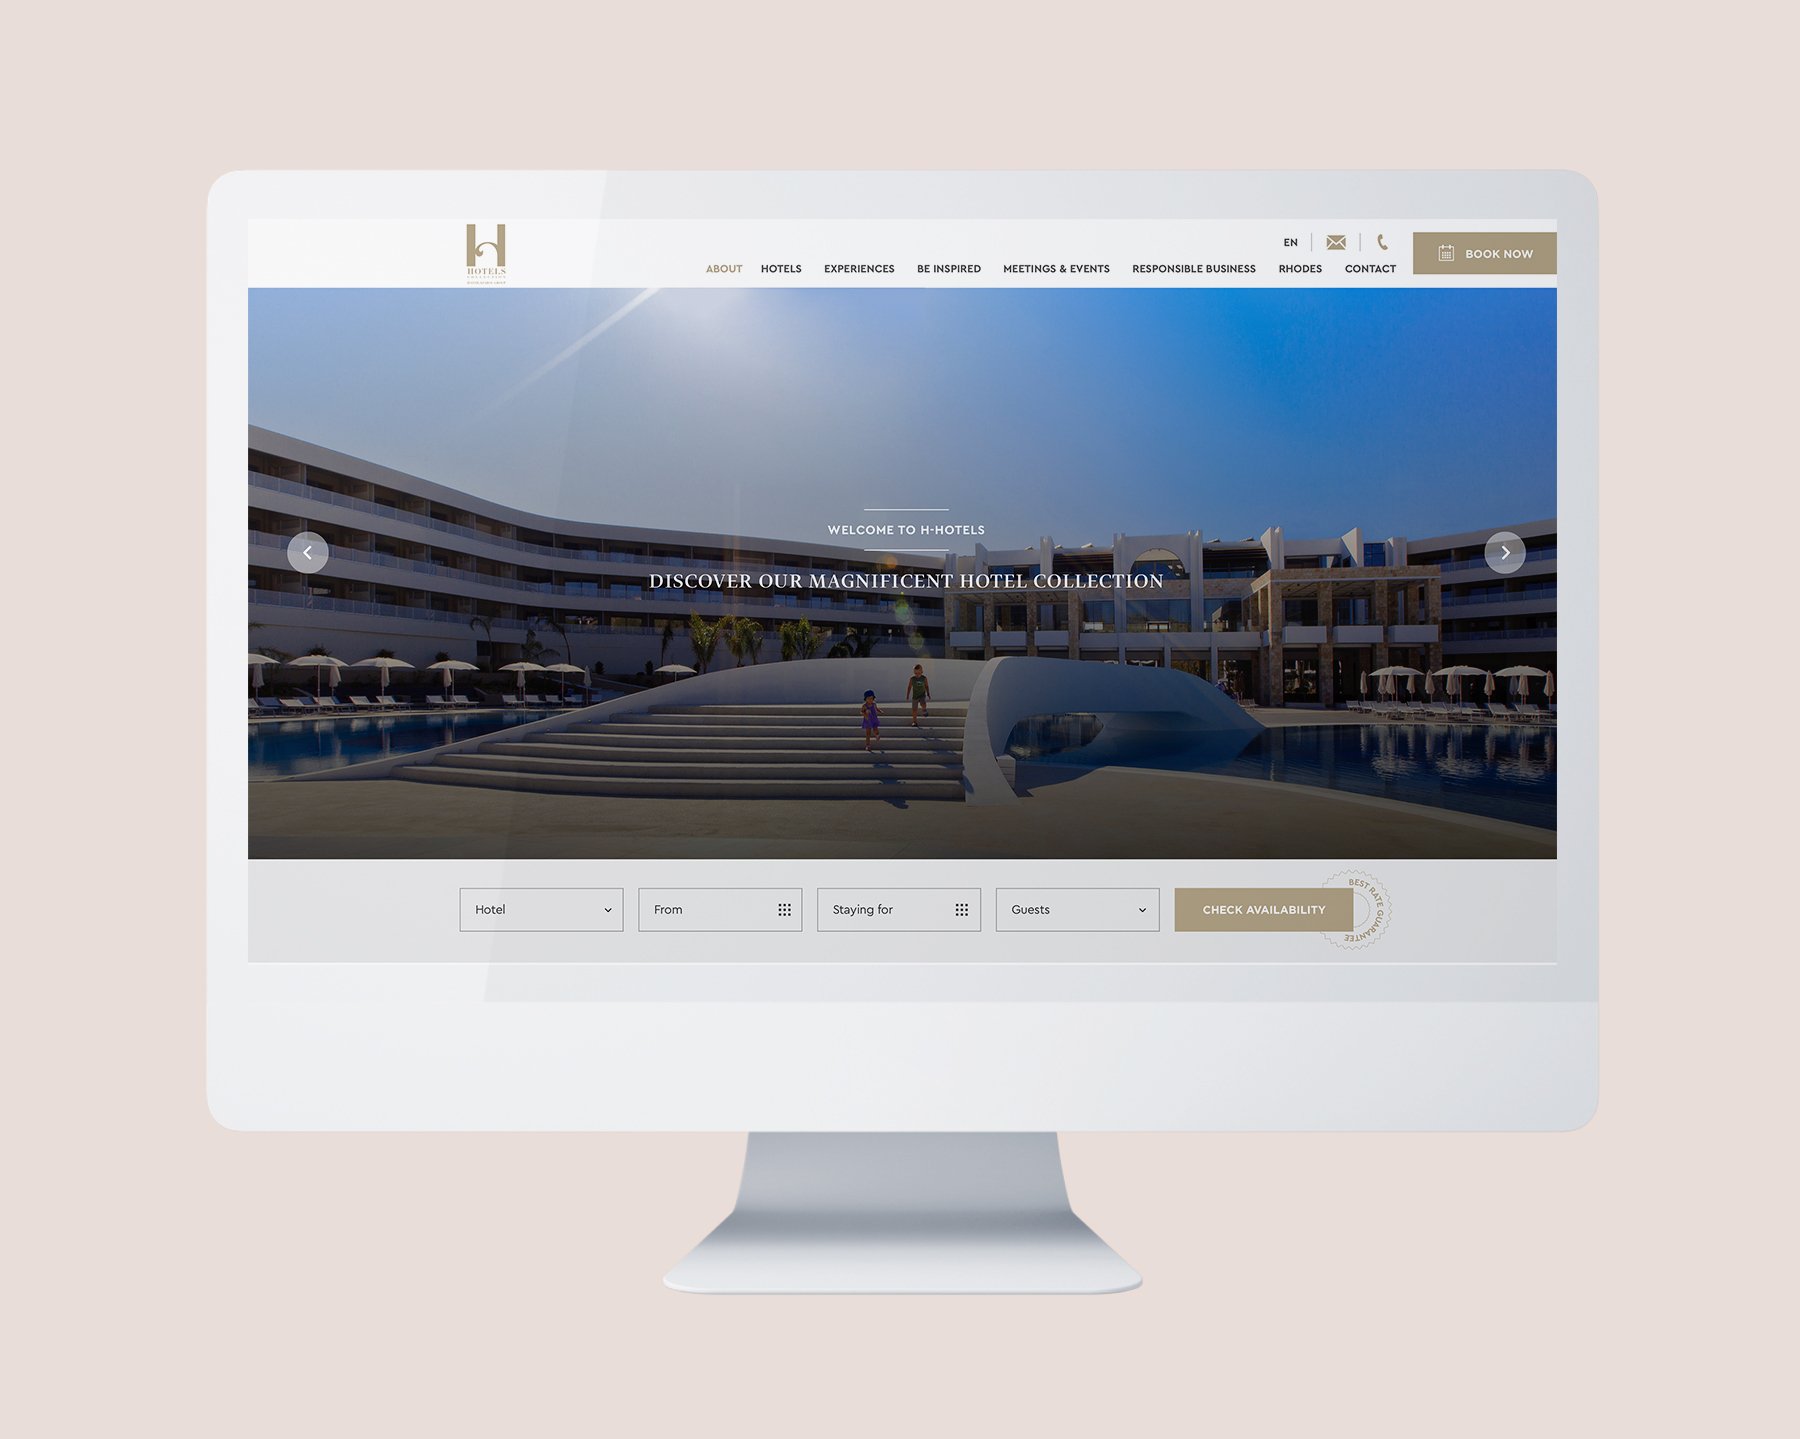 h hotels